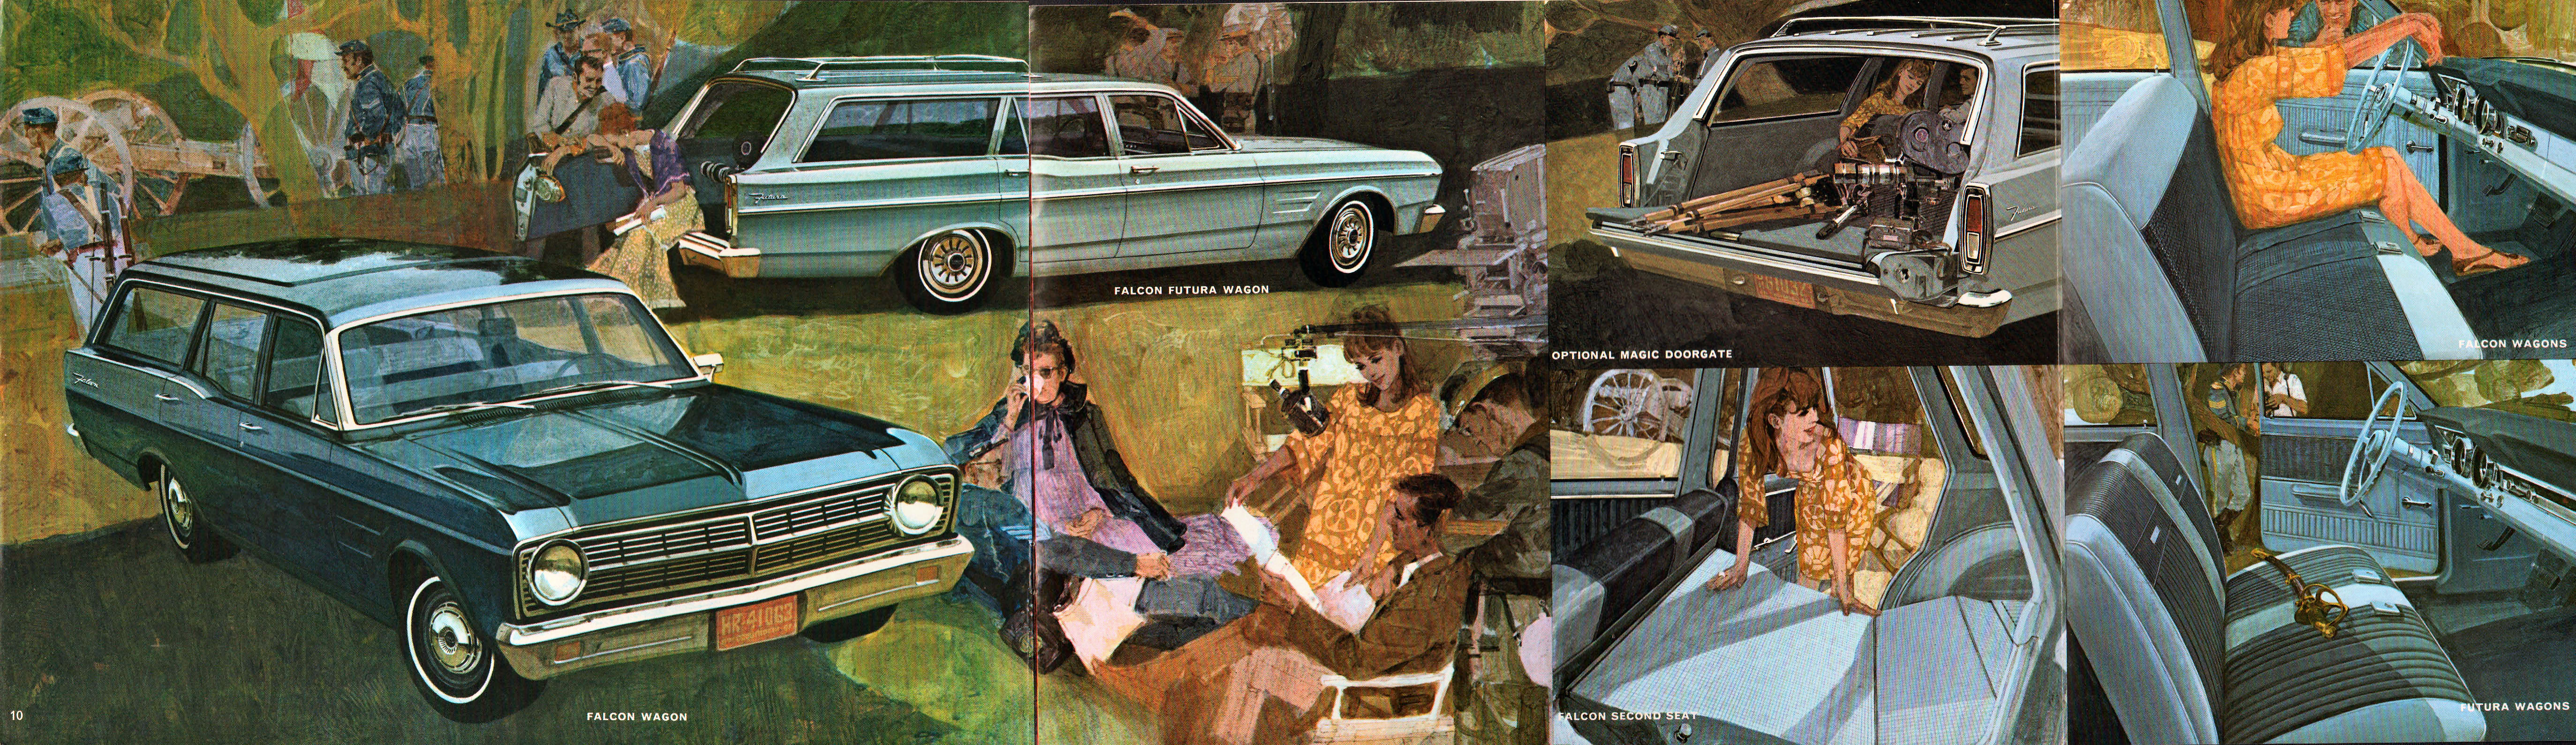 1967_Ford_Wagons_Rev-10-11